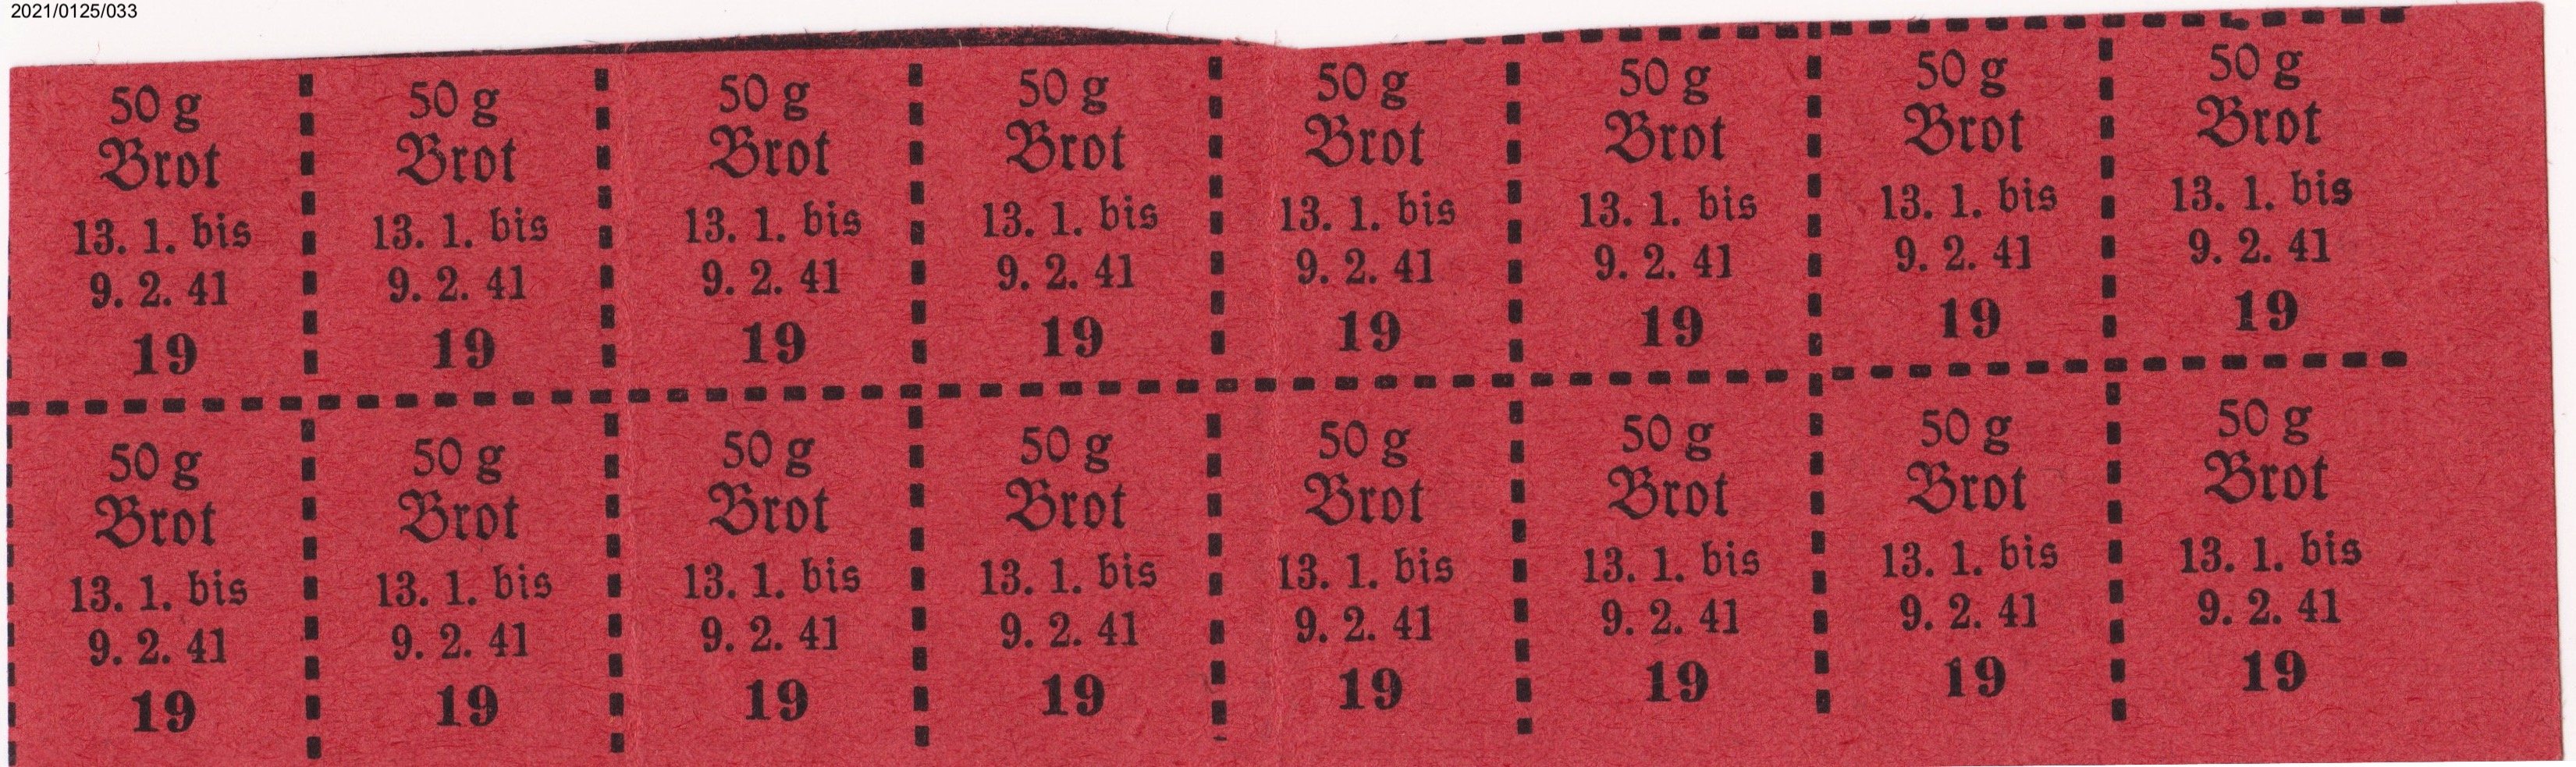 Lebensmittelmarken für 50g Brot 1941 (Museumsgesellschaft Bad Dürkheim e. V. CC BY-NC-SA)